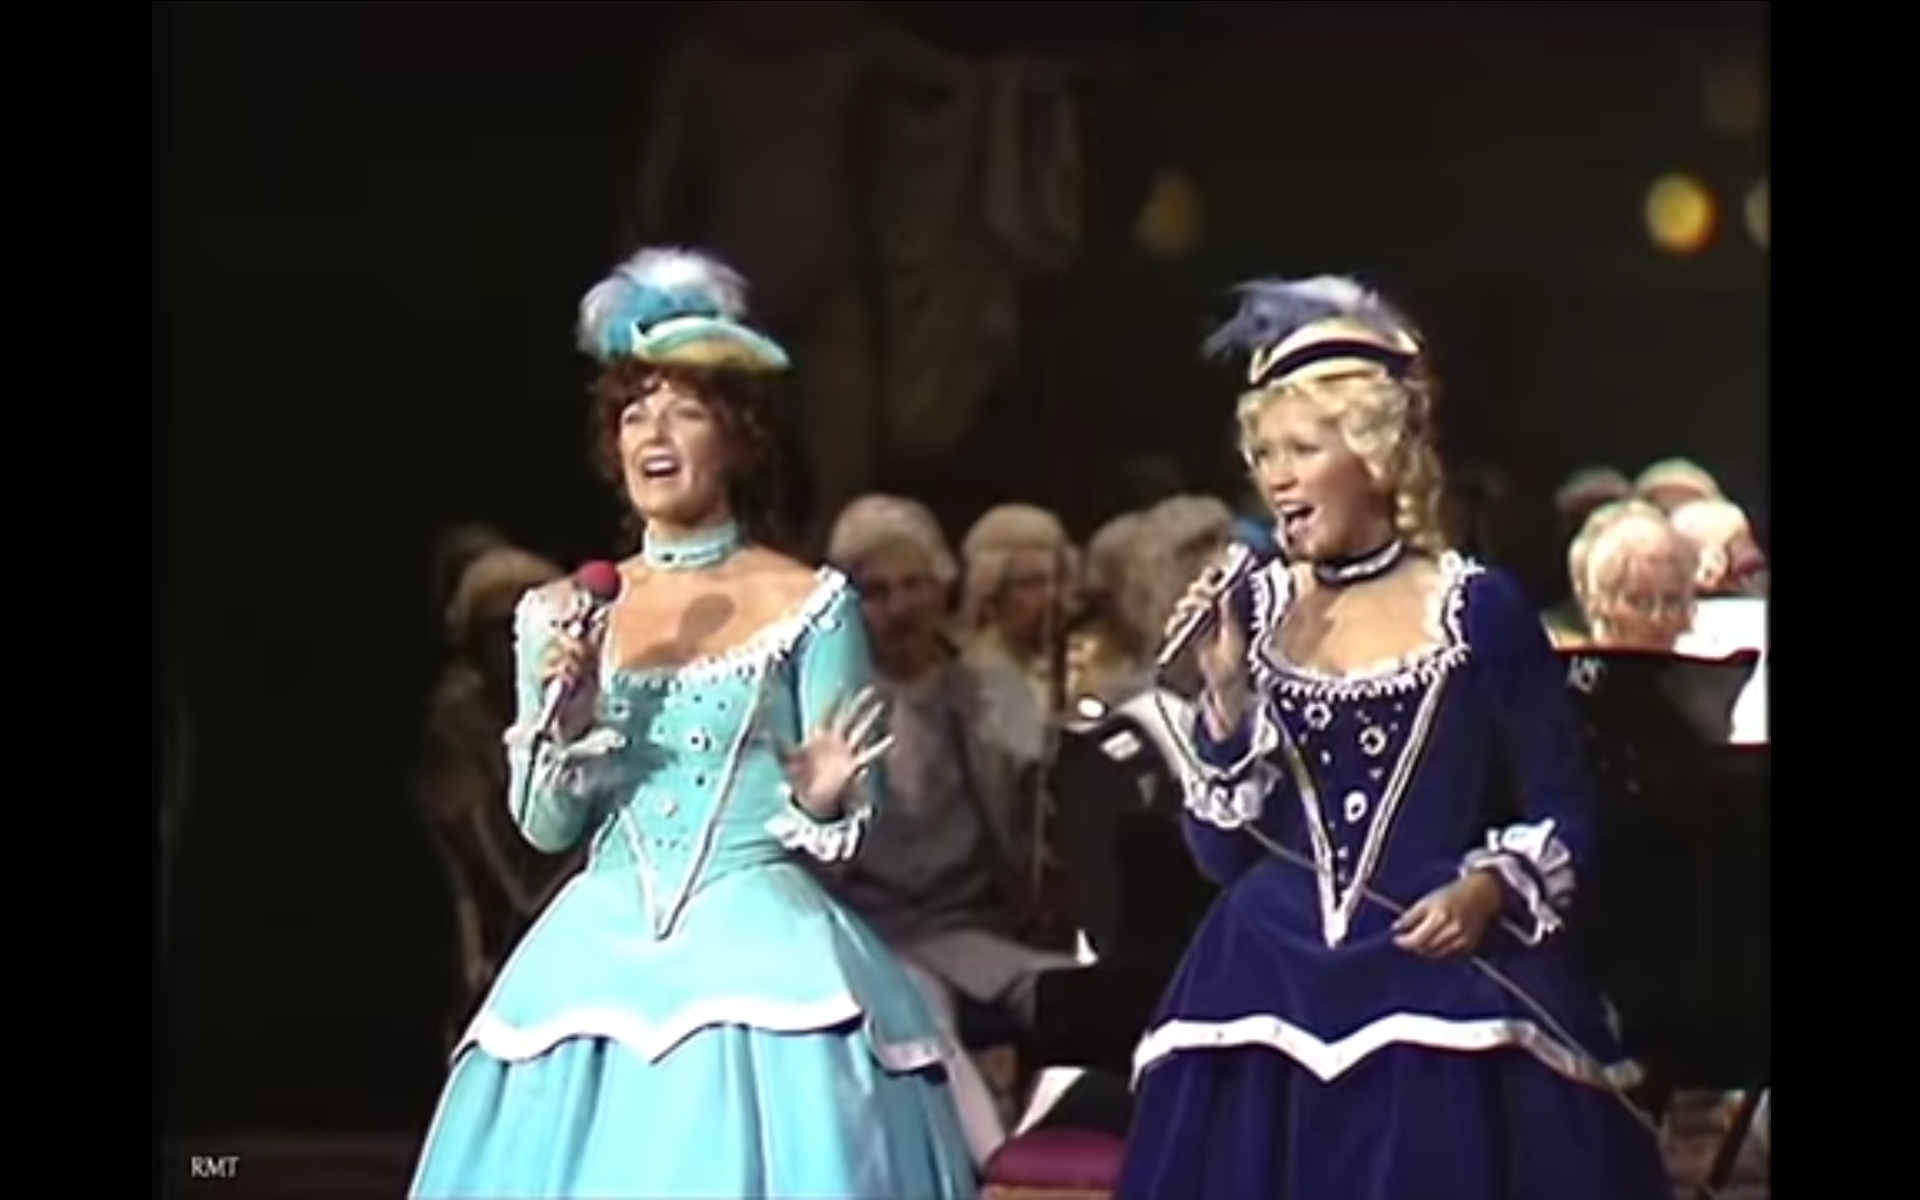 Абба Танцующая Королева. ABBA Dancing Queen обложка. ABBA 1977 Live. ABBA Dancing Queen картинки.